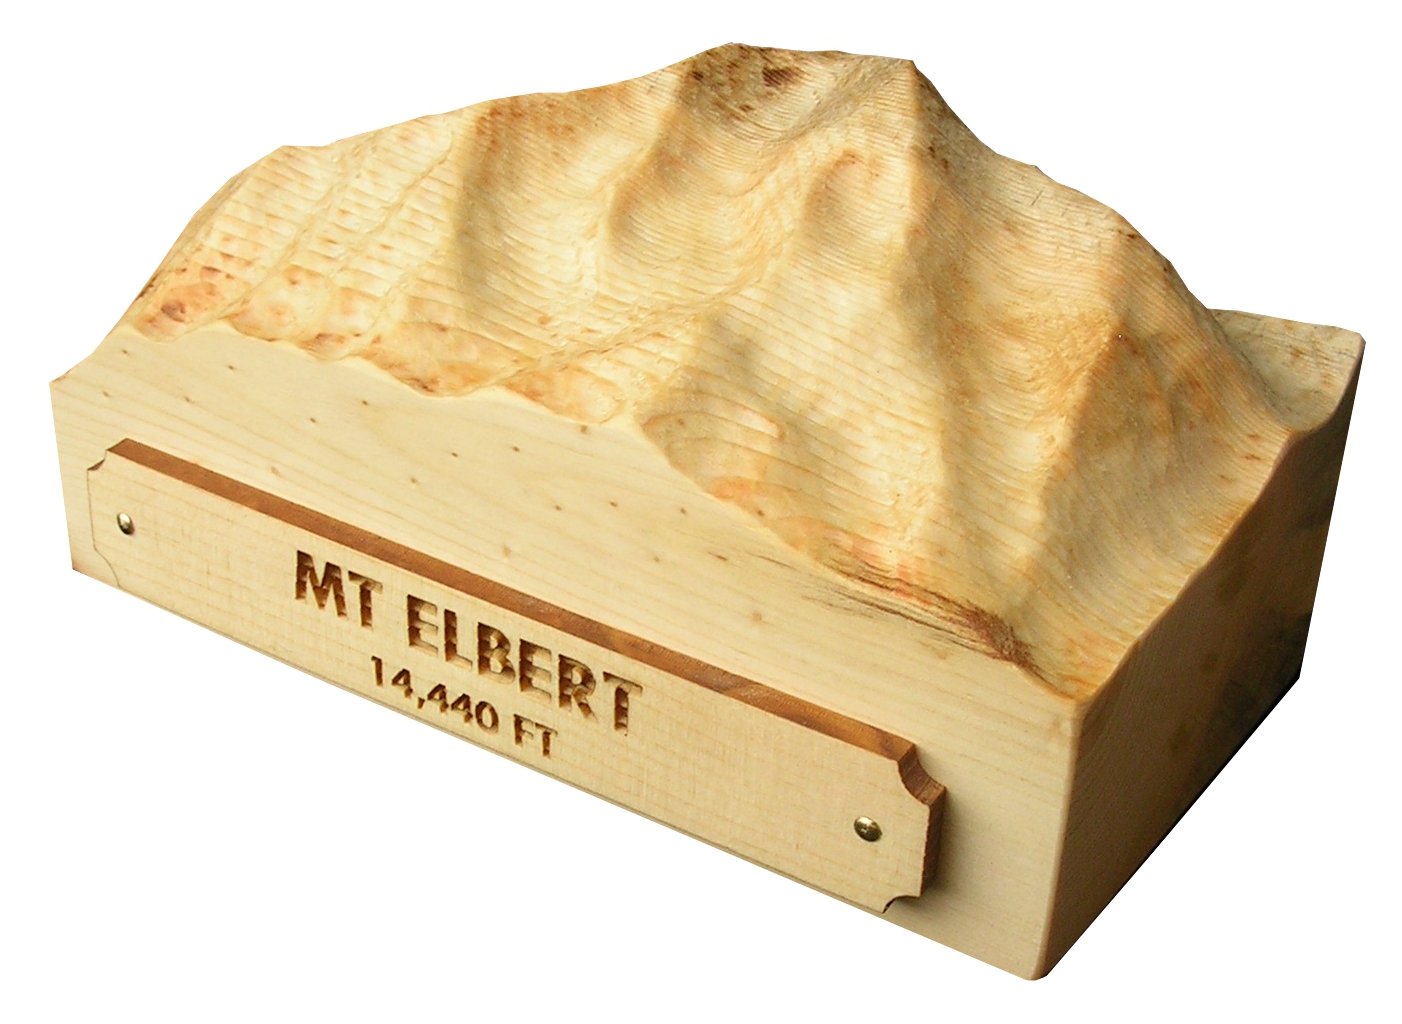 Mount-Elbert-Carving-Gift.jpg